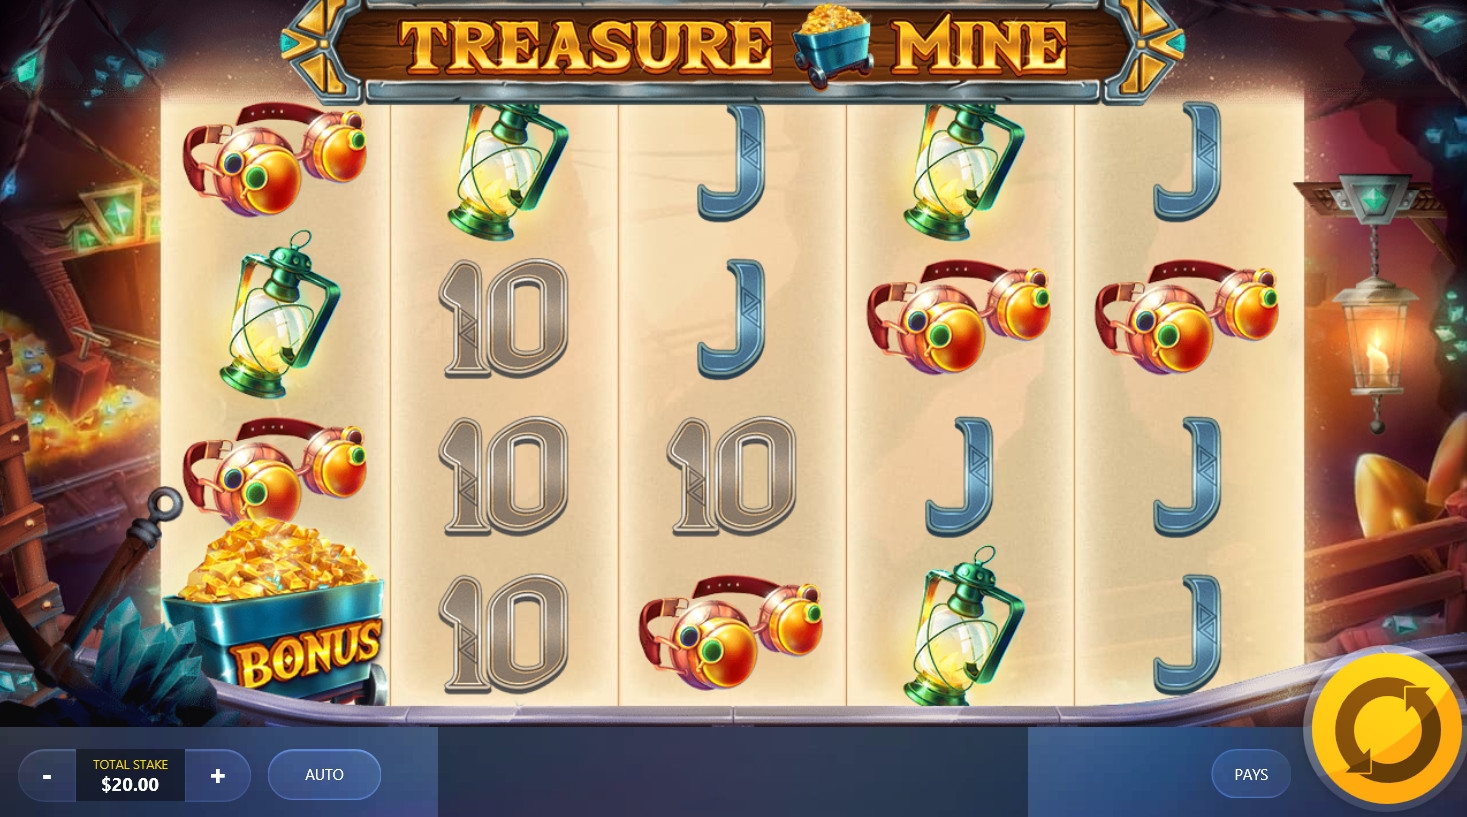 Treasure Mine (Treasure Mine) from category Slots